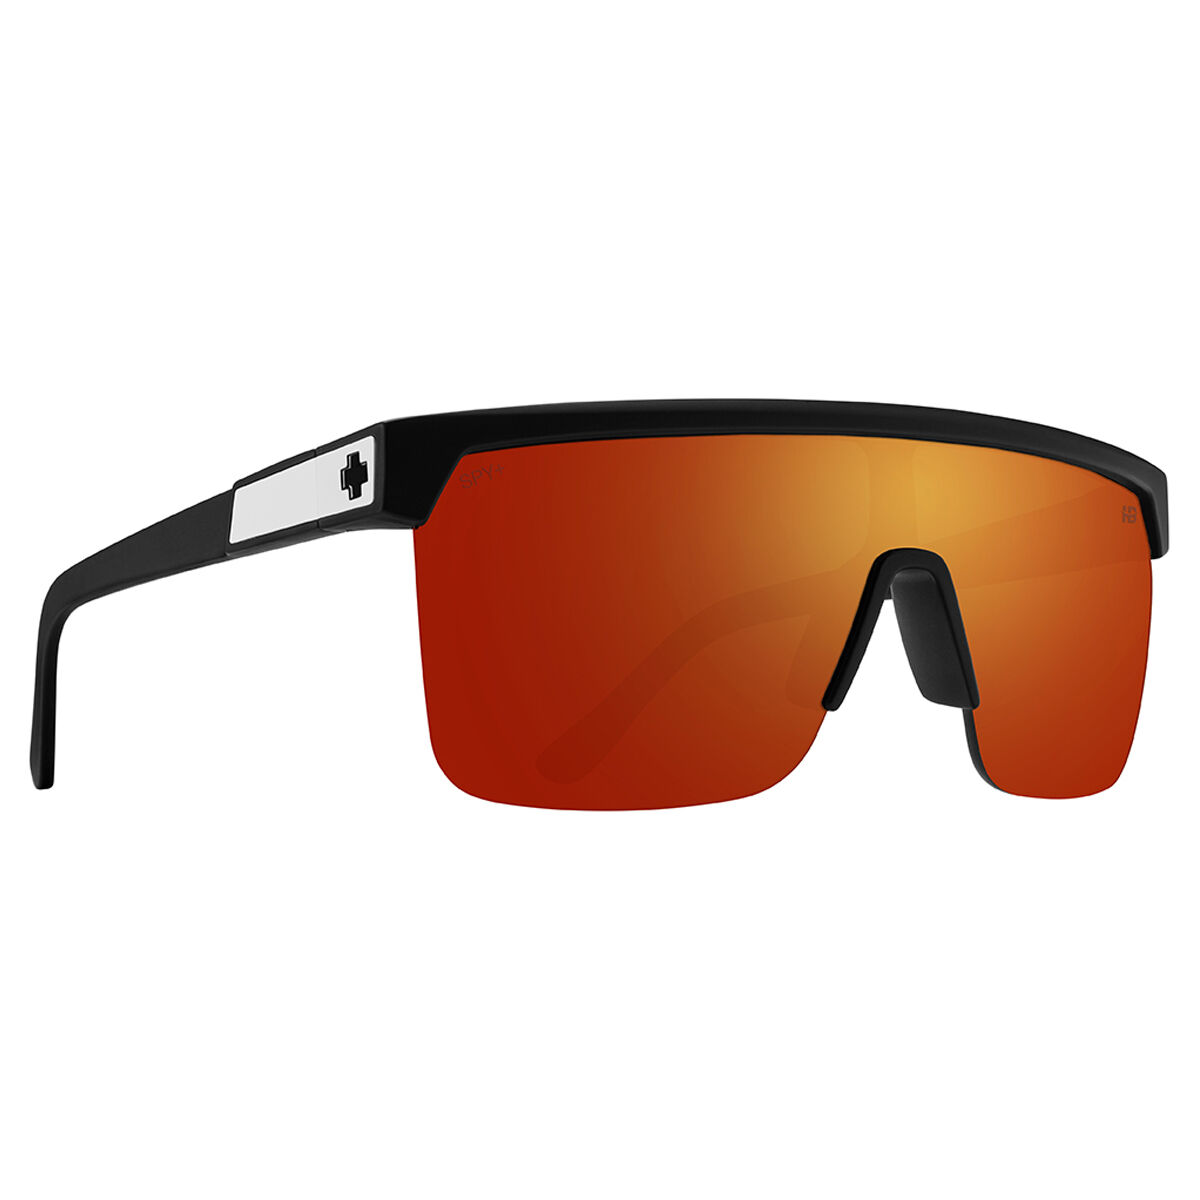 SPY + OPTICS Sunglasses KEN BLOCK 43 Helm PROMO GLASSES SPY PLUS NEW | eBay